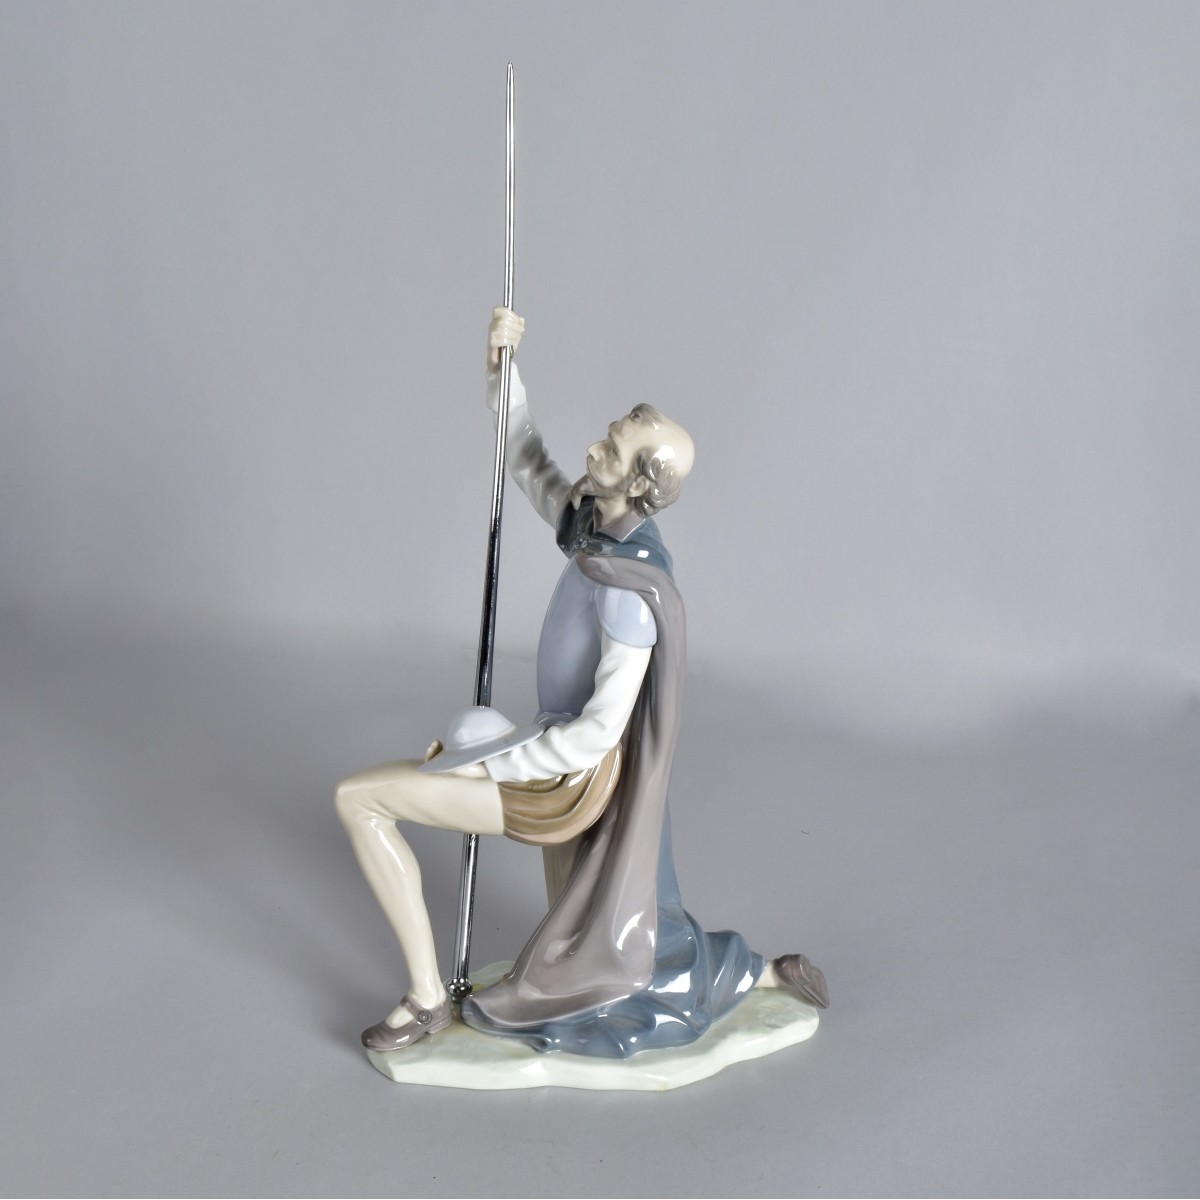 Lladro "The Quest" Figurine